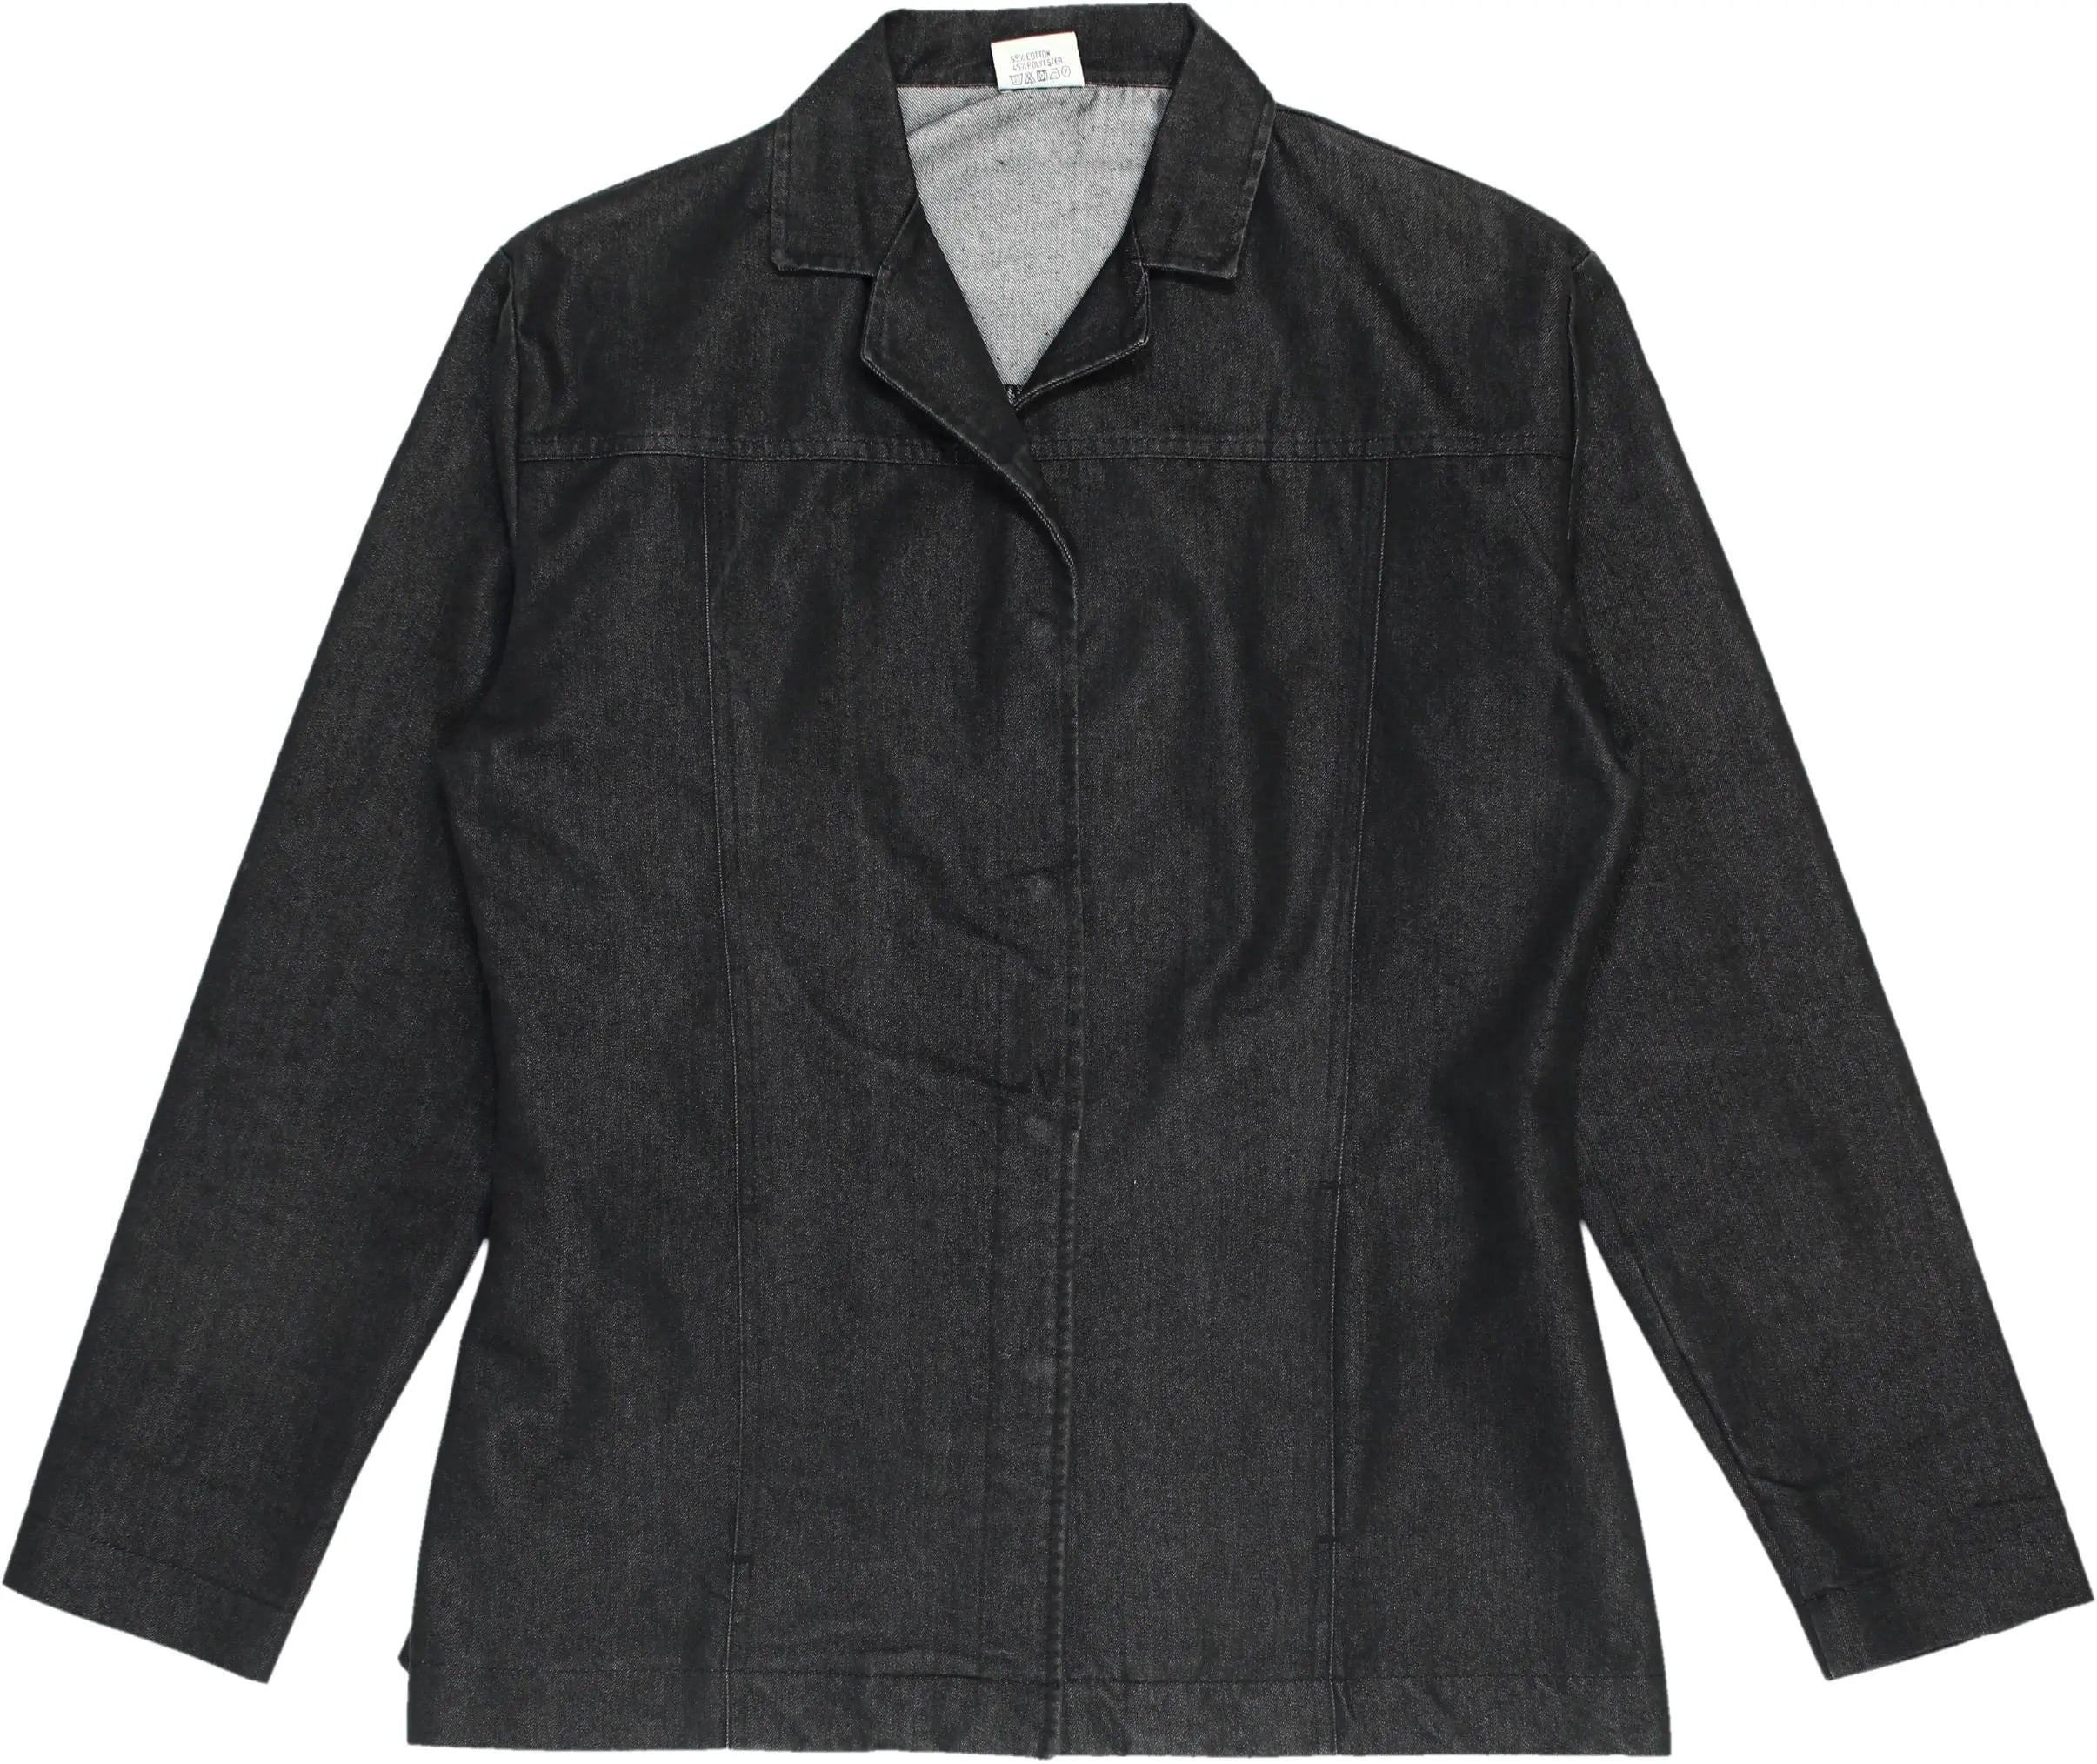 Yest - Denim Jacket- ThriftTale.com - Vintage and second handclothing